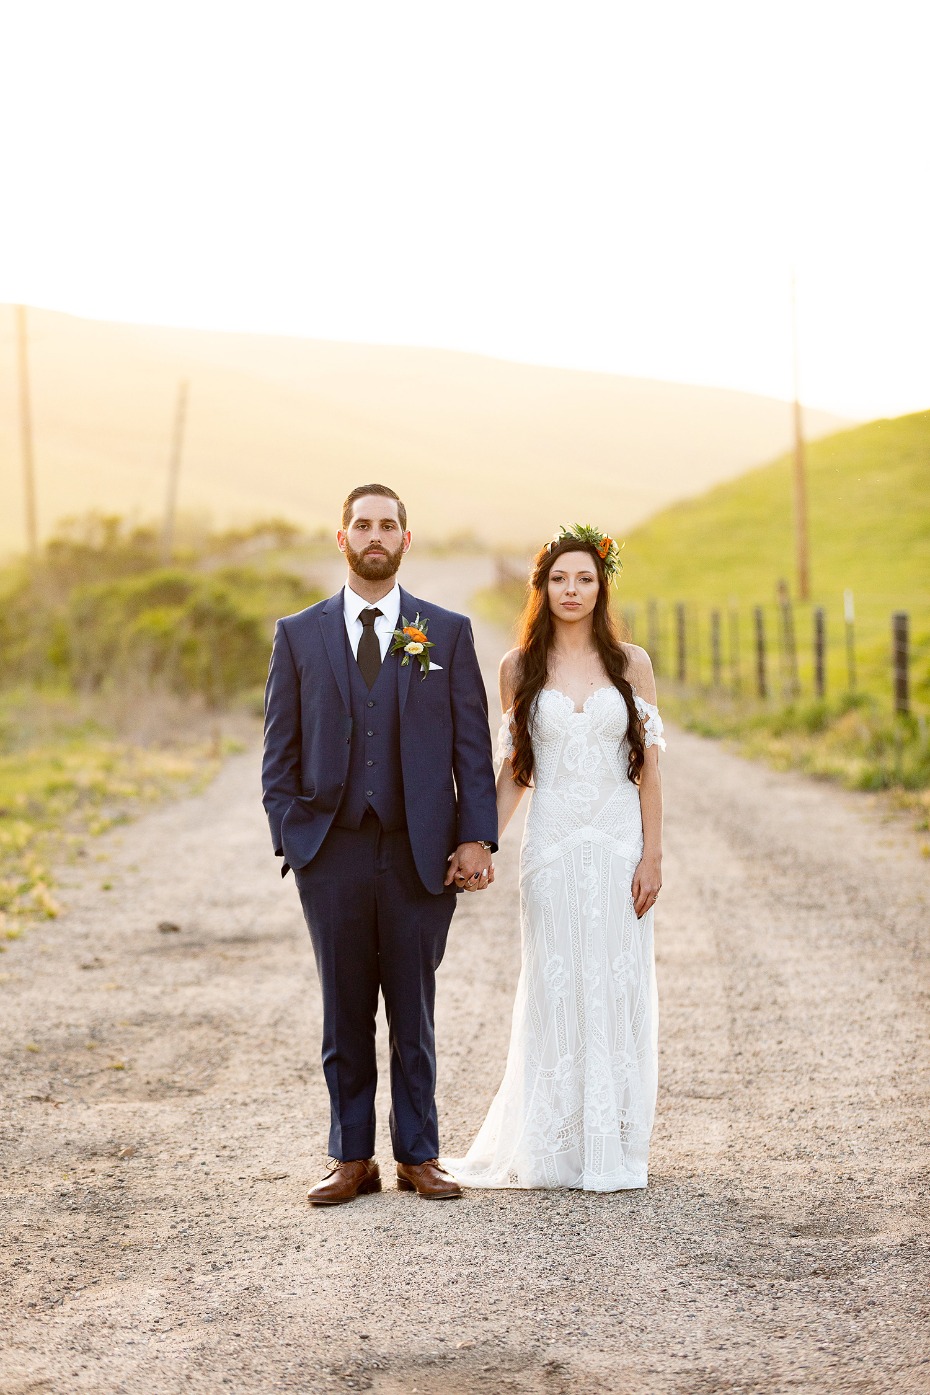 Cannabis infused wedding in California